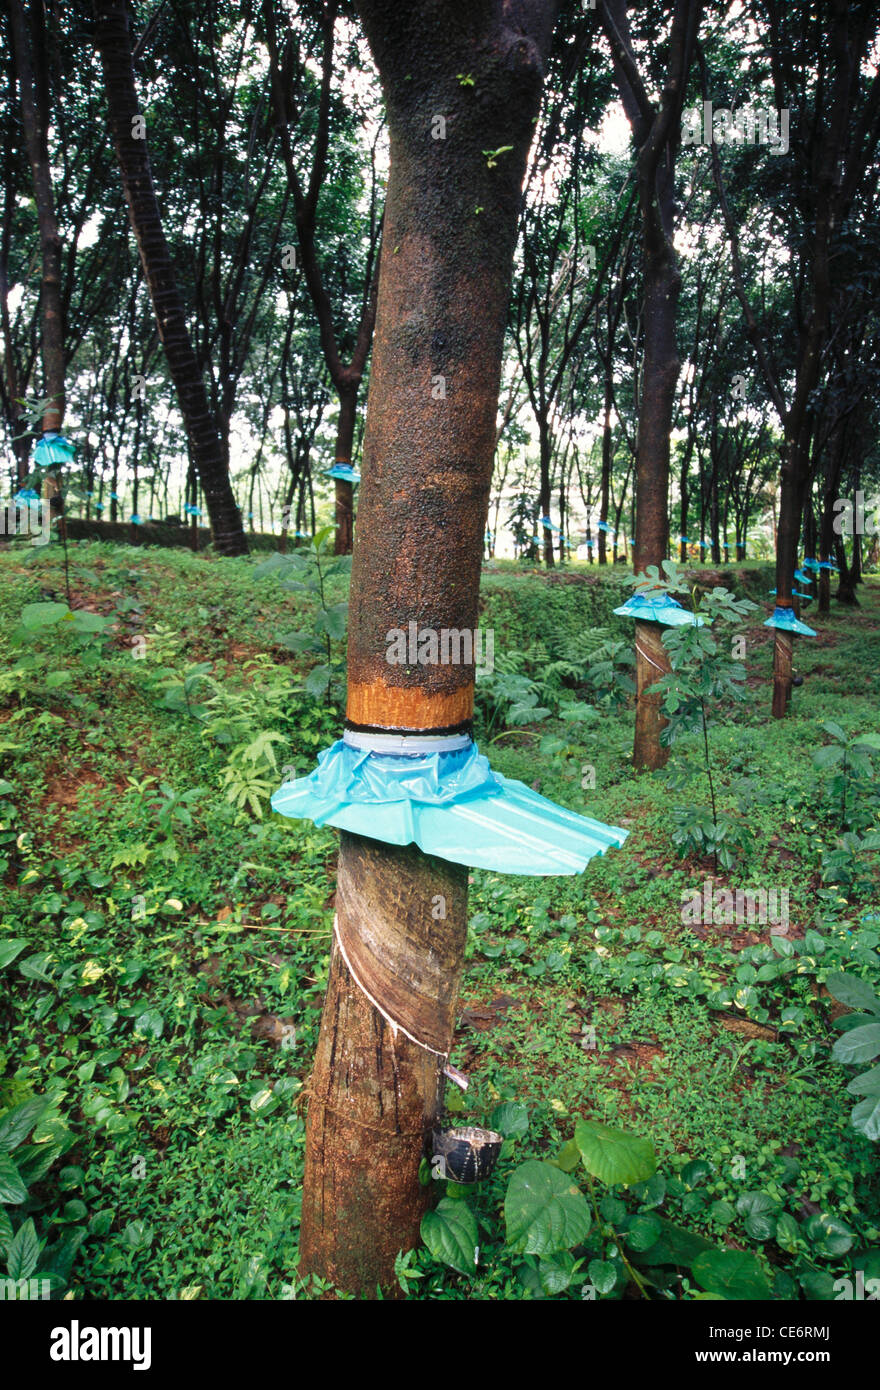 BPM 85856 : collecting natural rubber sap in rubber tree farm plantation kerala india Stock Photo